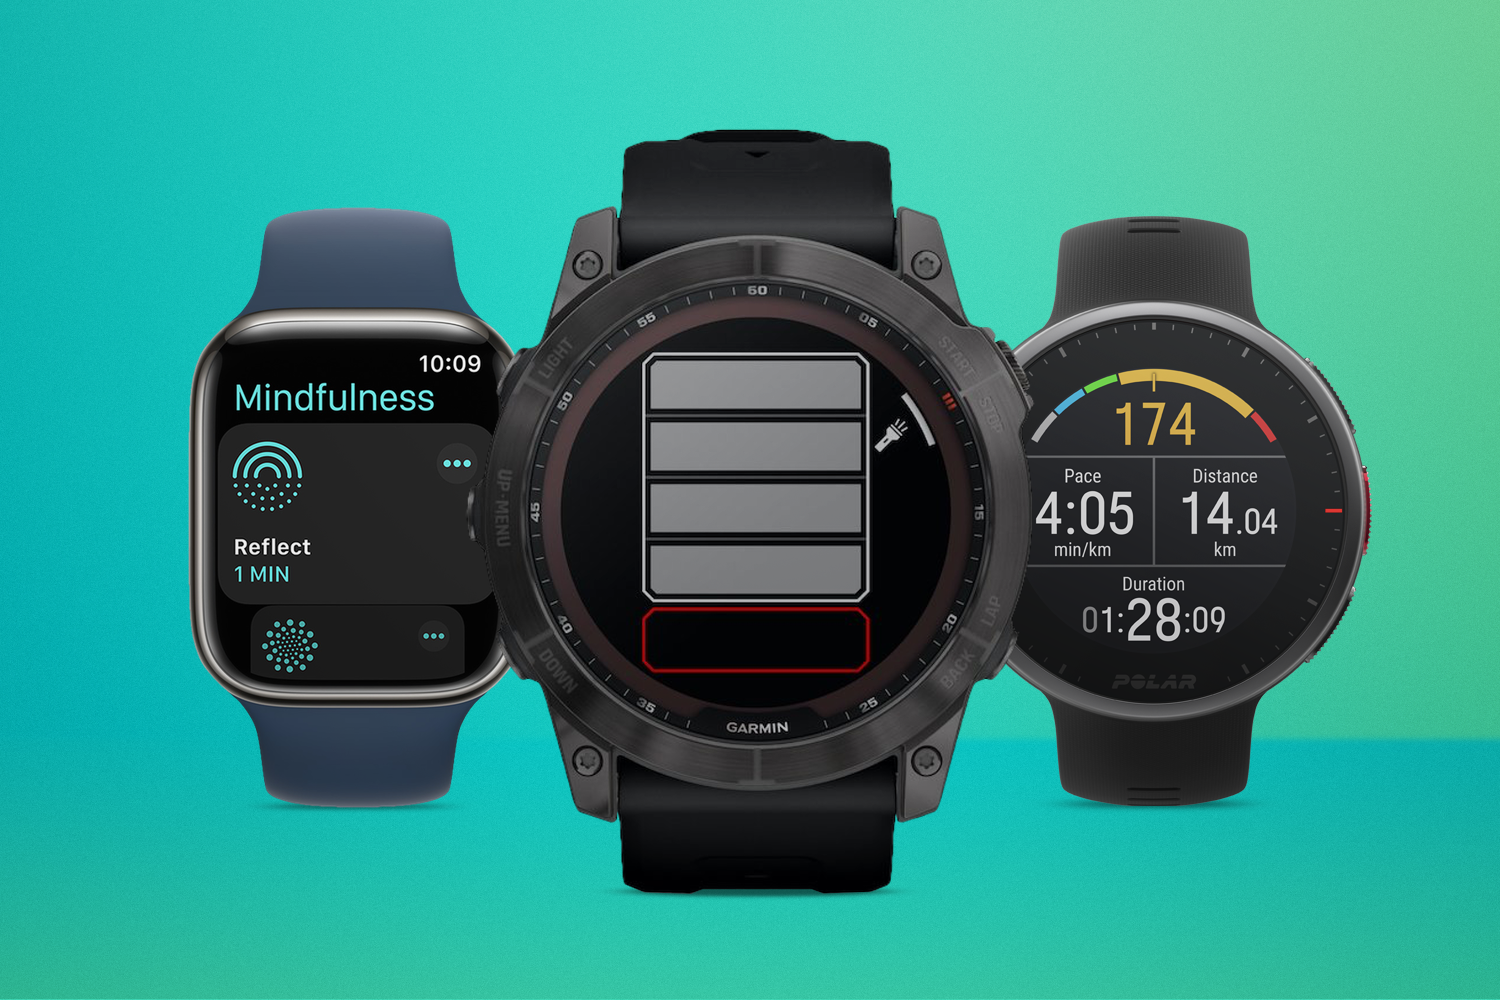 Casio G-Shock Rangeman GPRB1000-1 GPS Watch Review | aBlogtoWatch